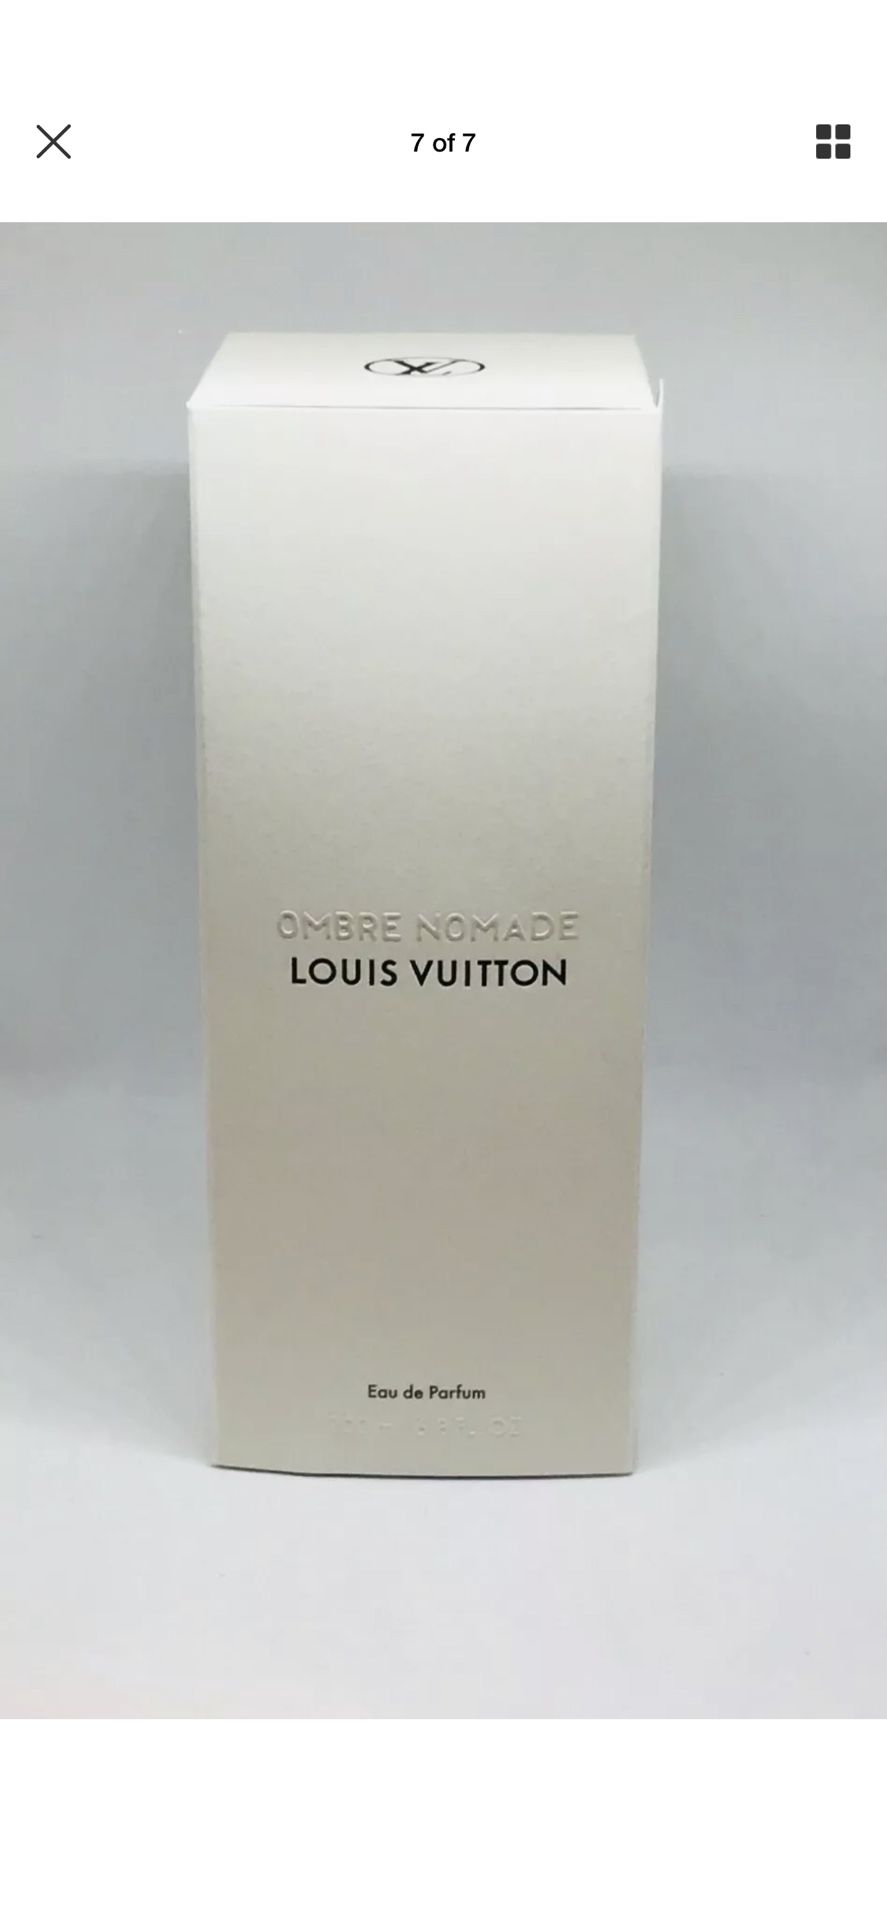 Louis Vuitton Ombré Nomade Cologne Sample for Sale in Chandler, AZ - OfferUp